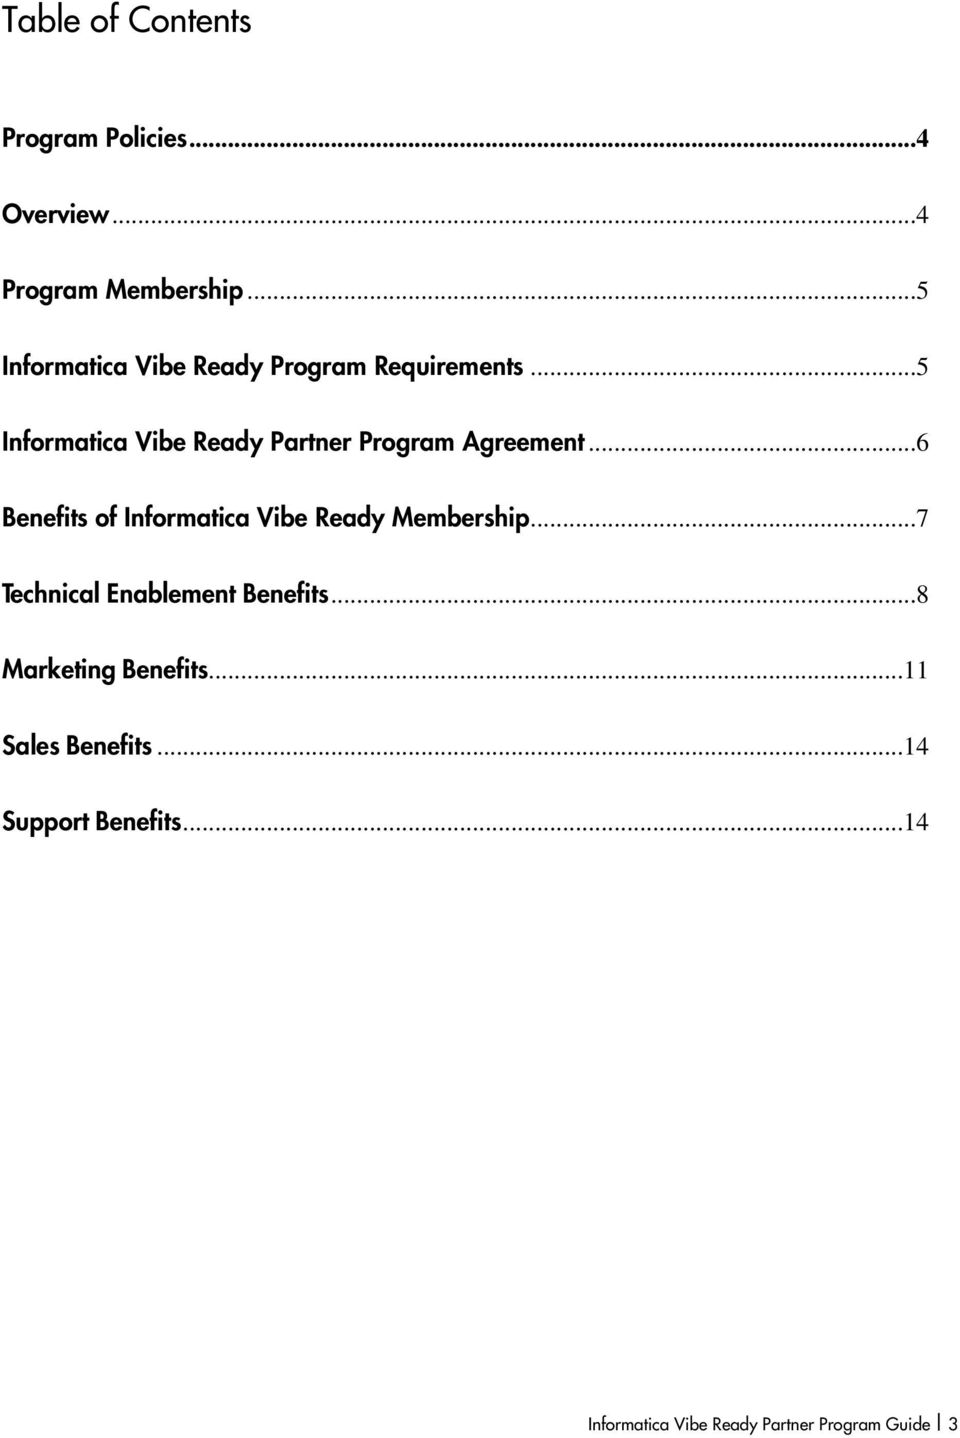 ..5 Informatica Vibe Ready Partner Program Agreement.